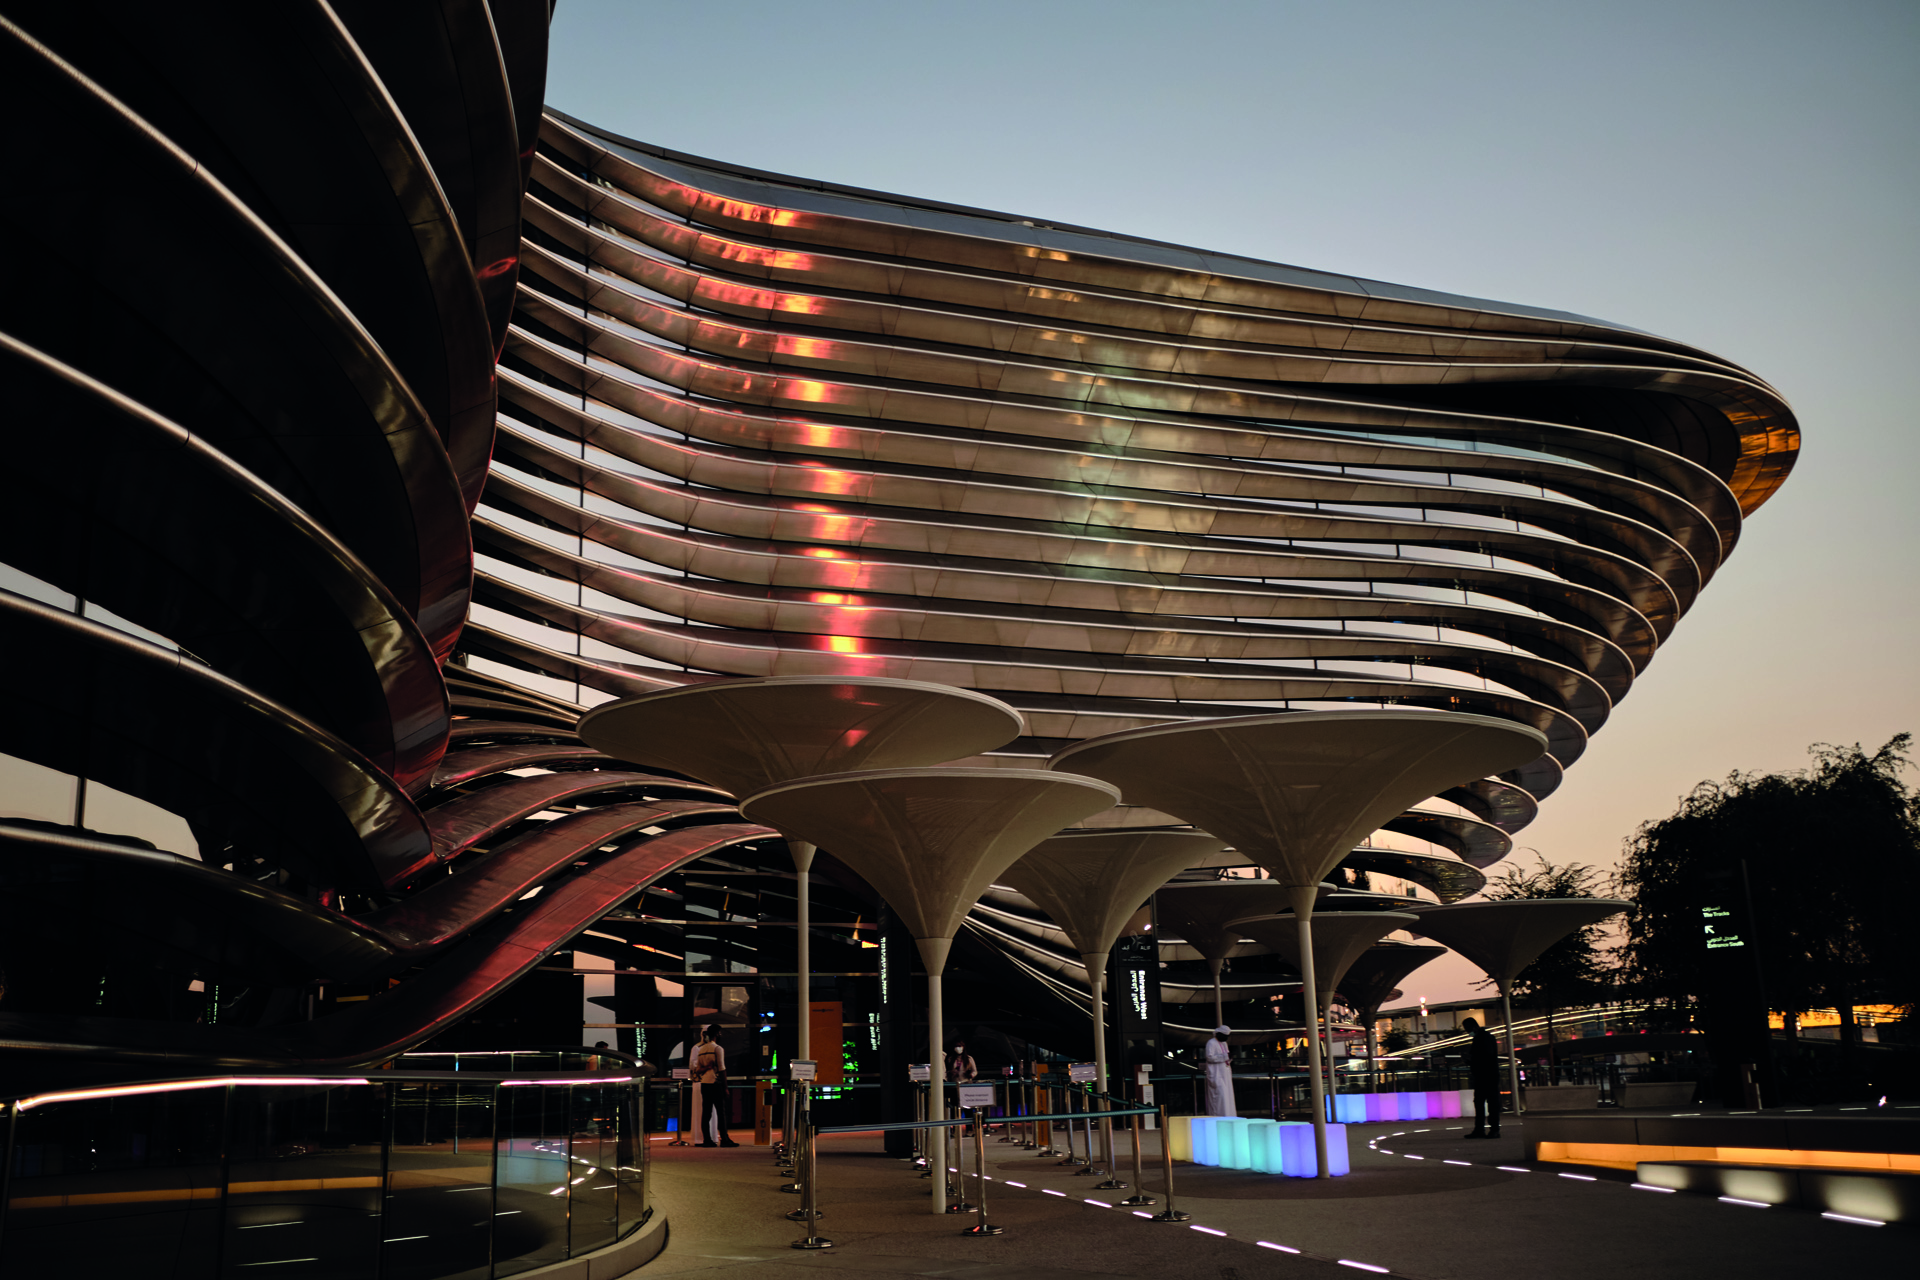 Dubai, United Arab Emirates - January 12, 2022: Alif, Mobility Pavilion at Dubai EXPO 2020. High quality photo